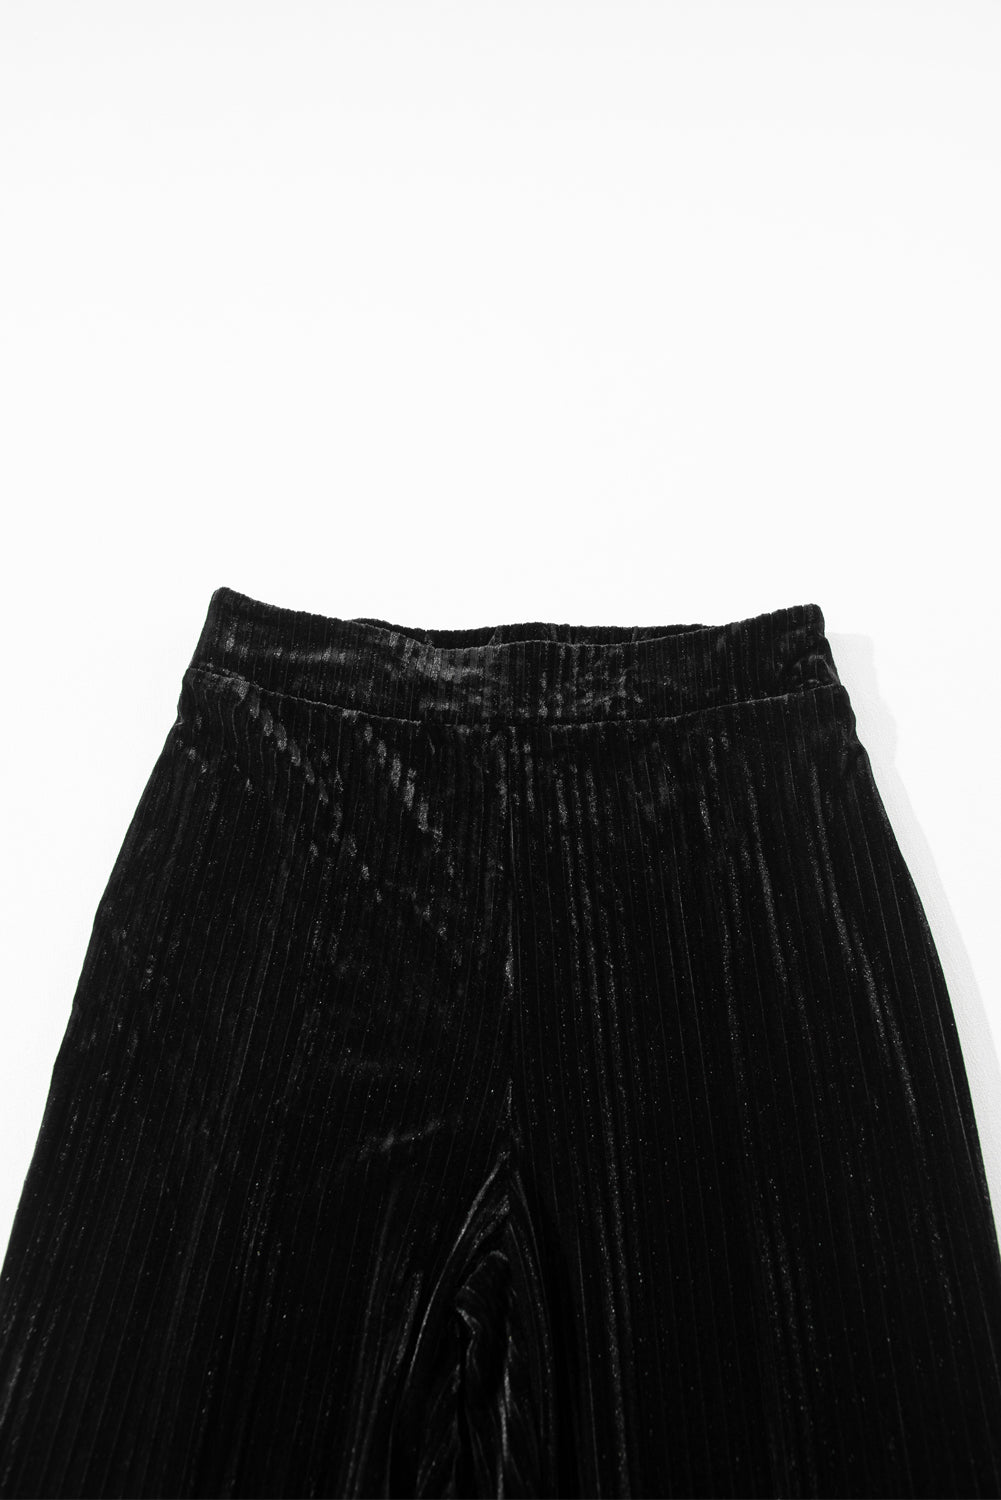 Black Solid Color High Waist Flare Corduroy Pants